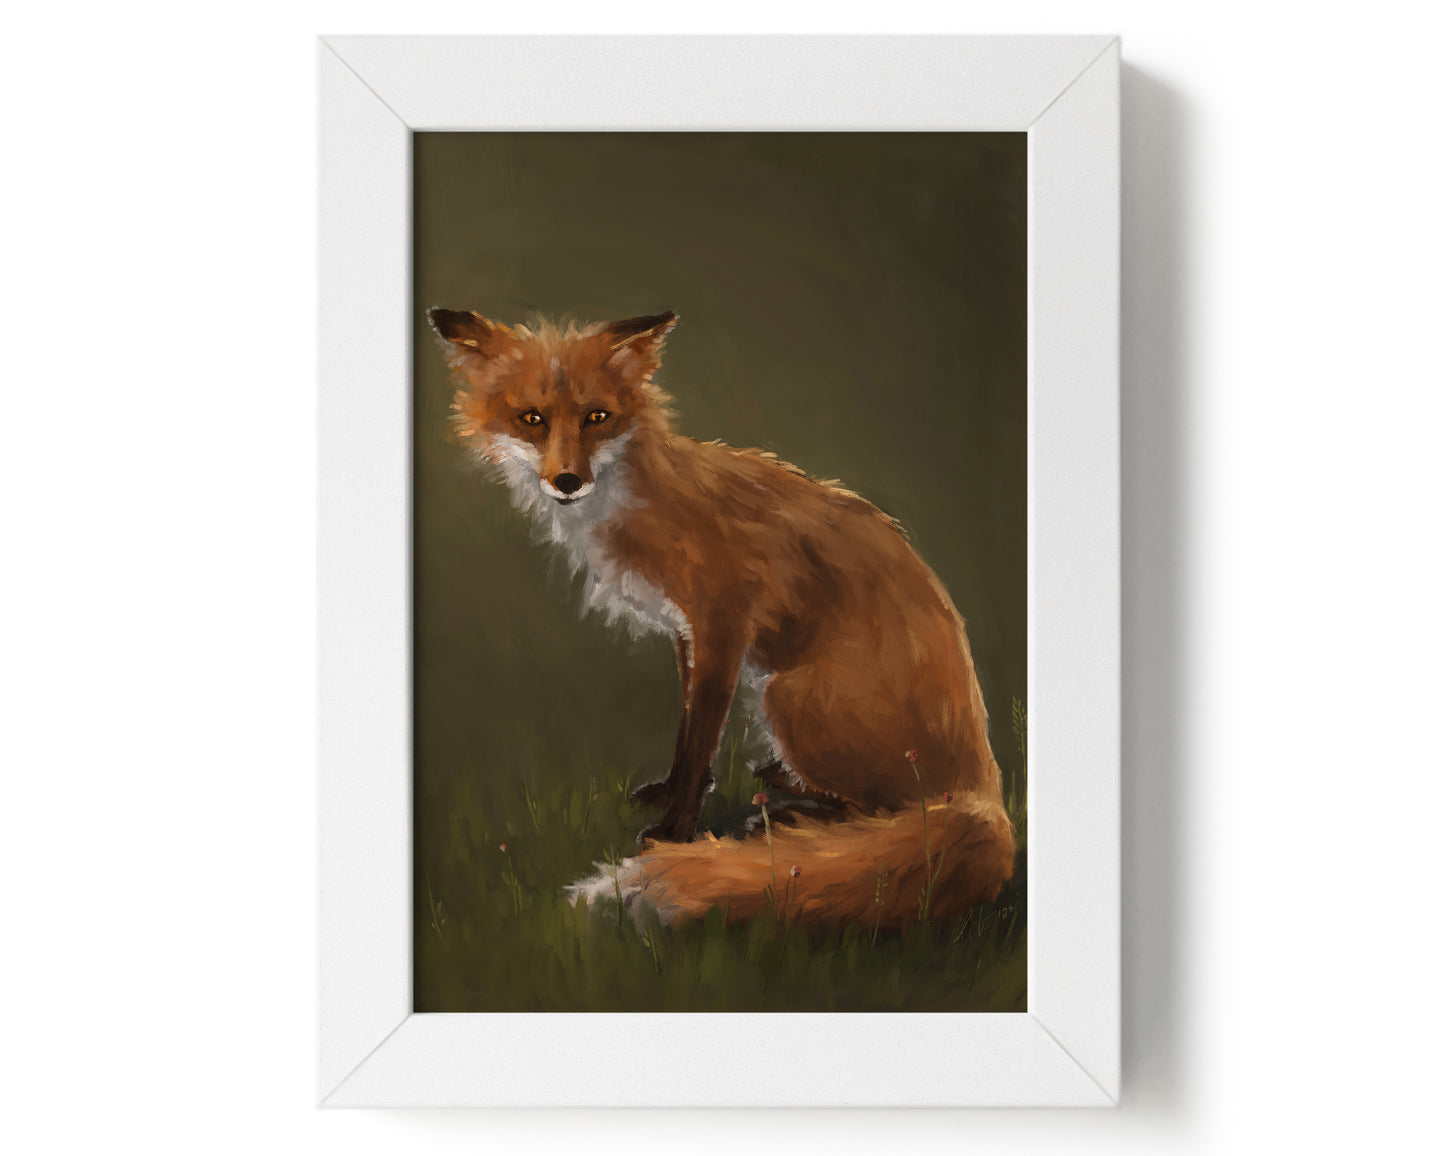 "The Fox" by Catherine Hébert - Forest Fox Oil Painting Giclée Art Print - 5"x7" size